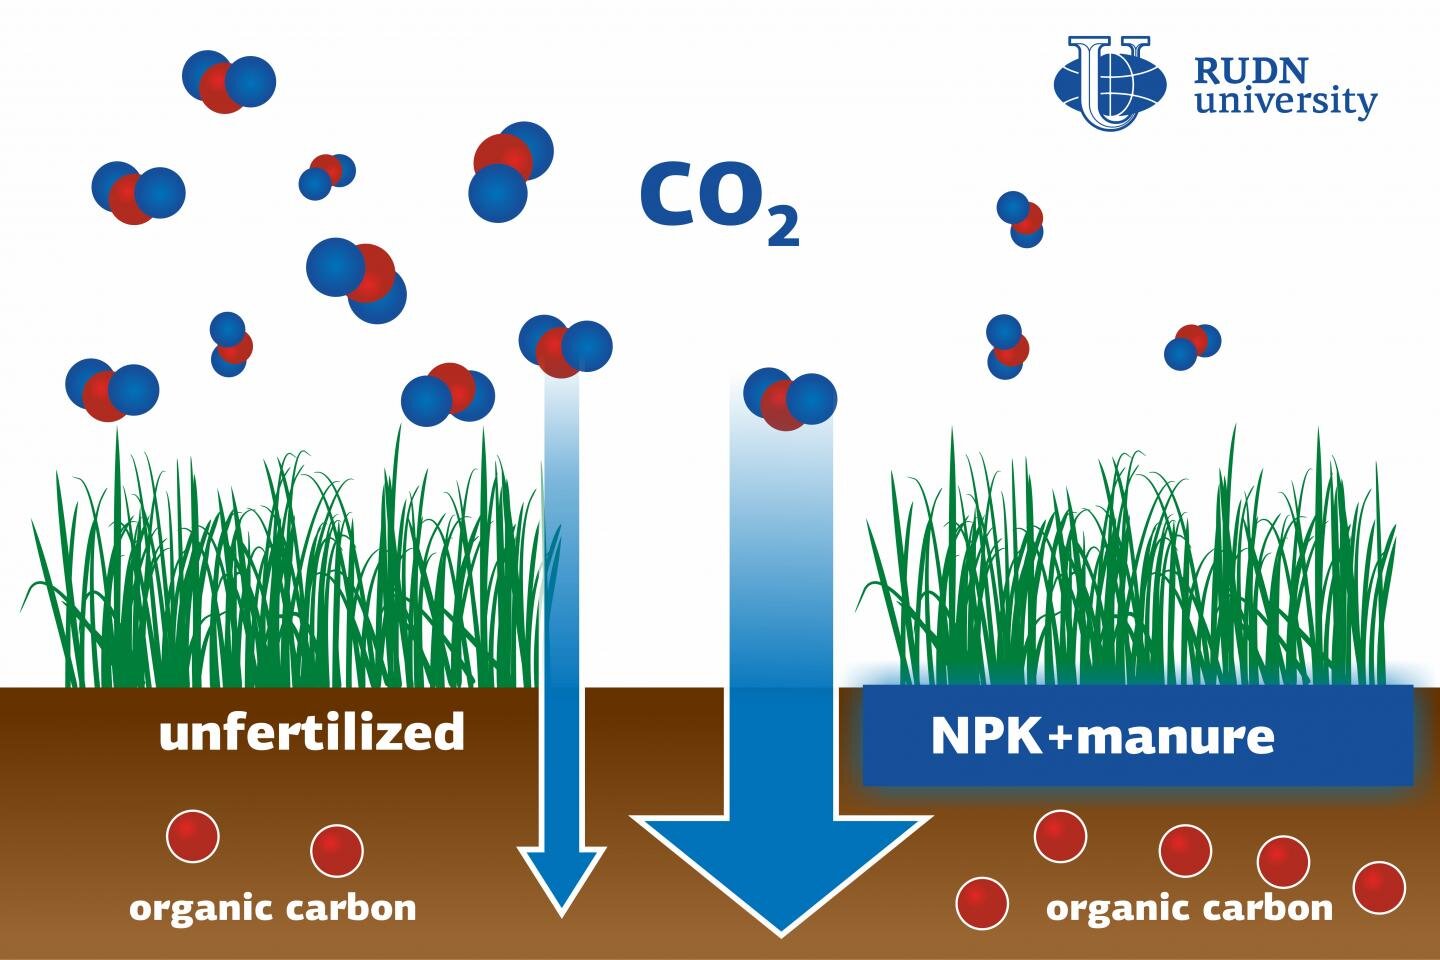 Paddy soil fertilization can help reduce greenhouse effect